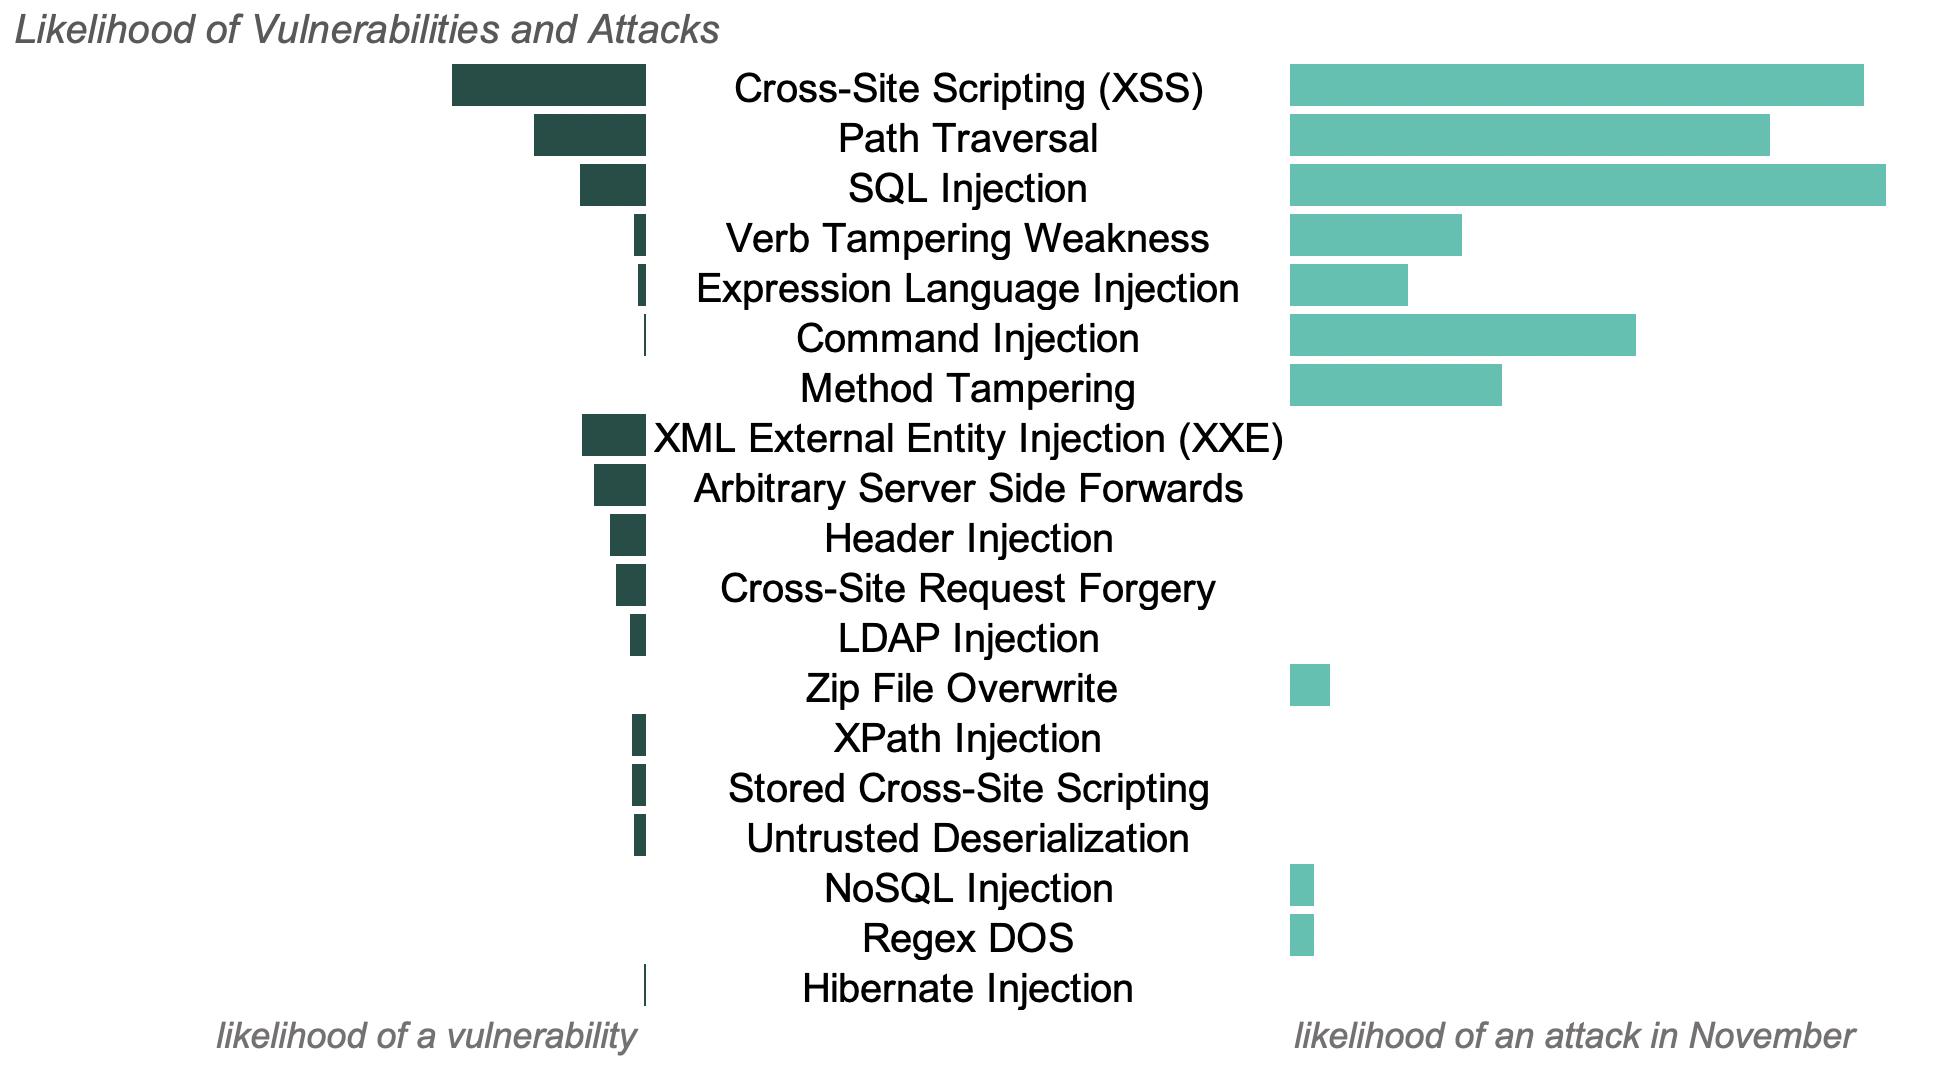 Likelihood of vulnerabilities and attacks, Nov 2019